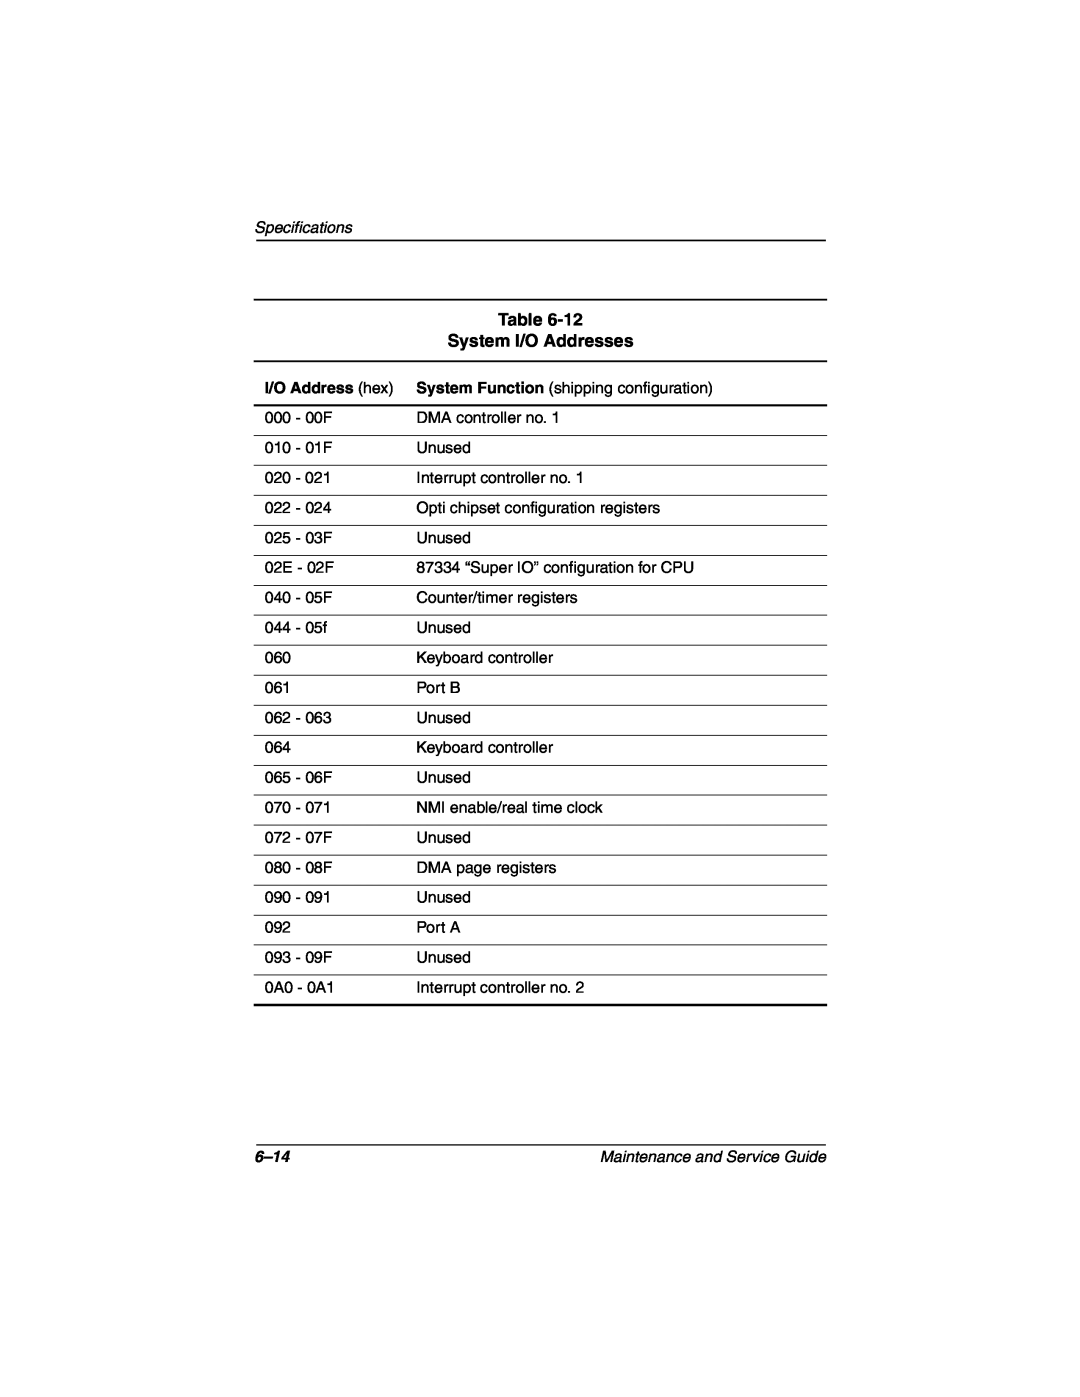 Compaq N160 manual System I/O Addresses, Specifications, 6-14 